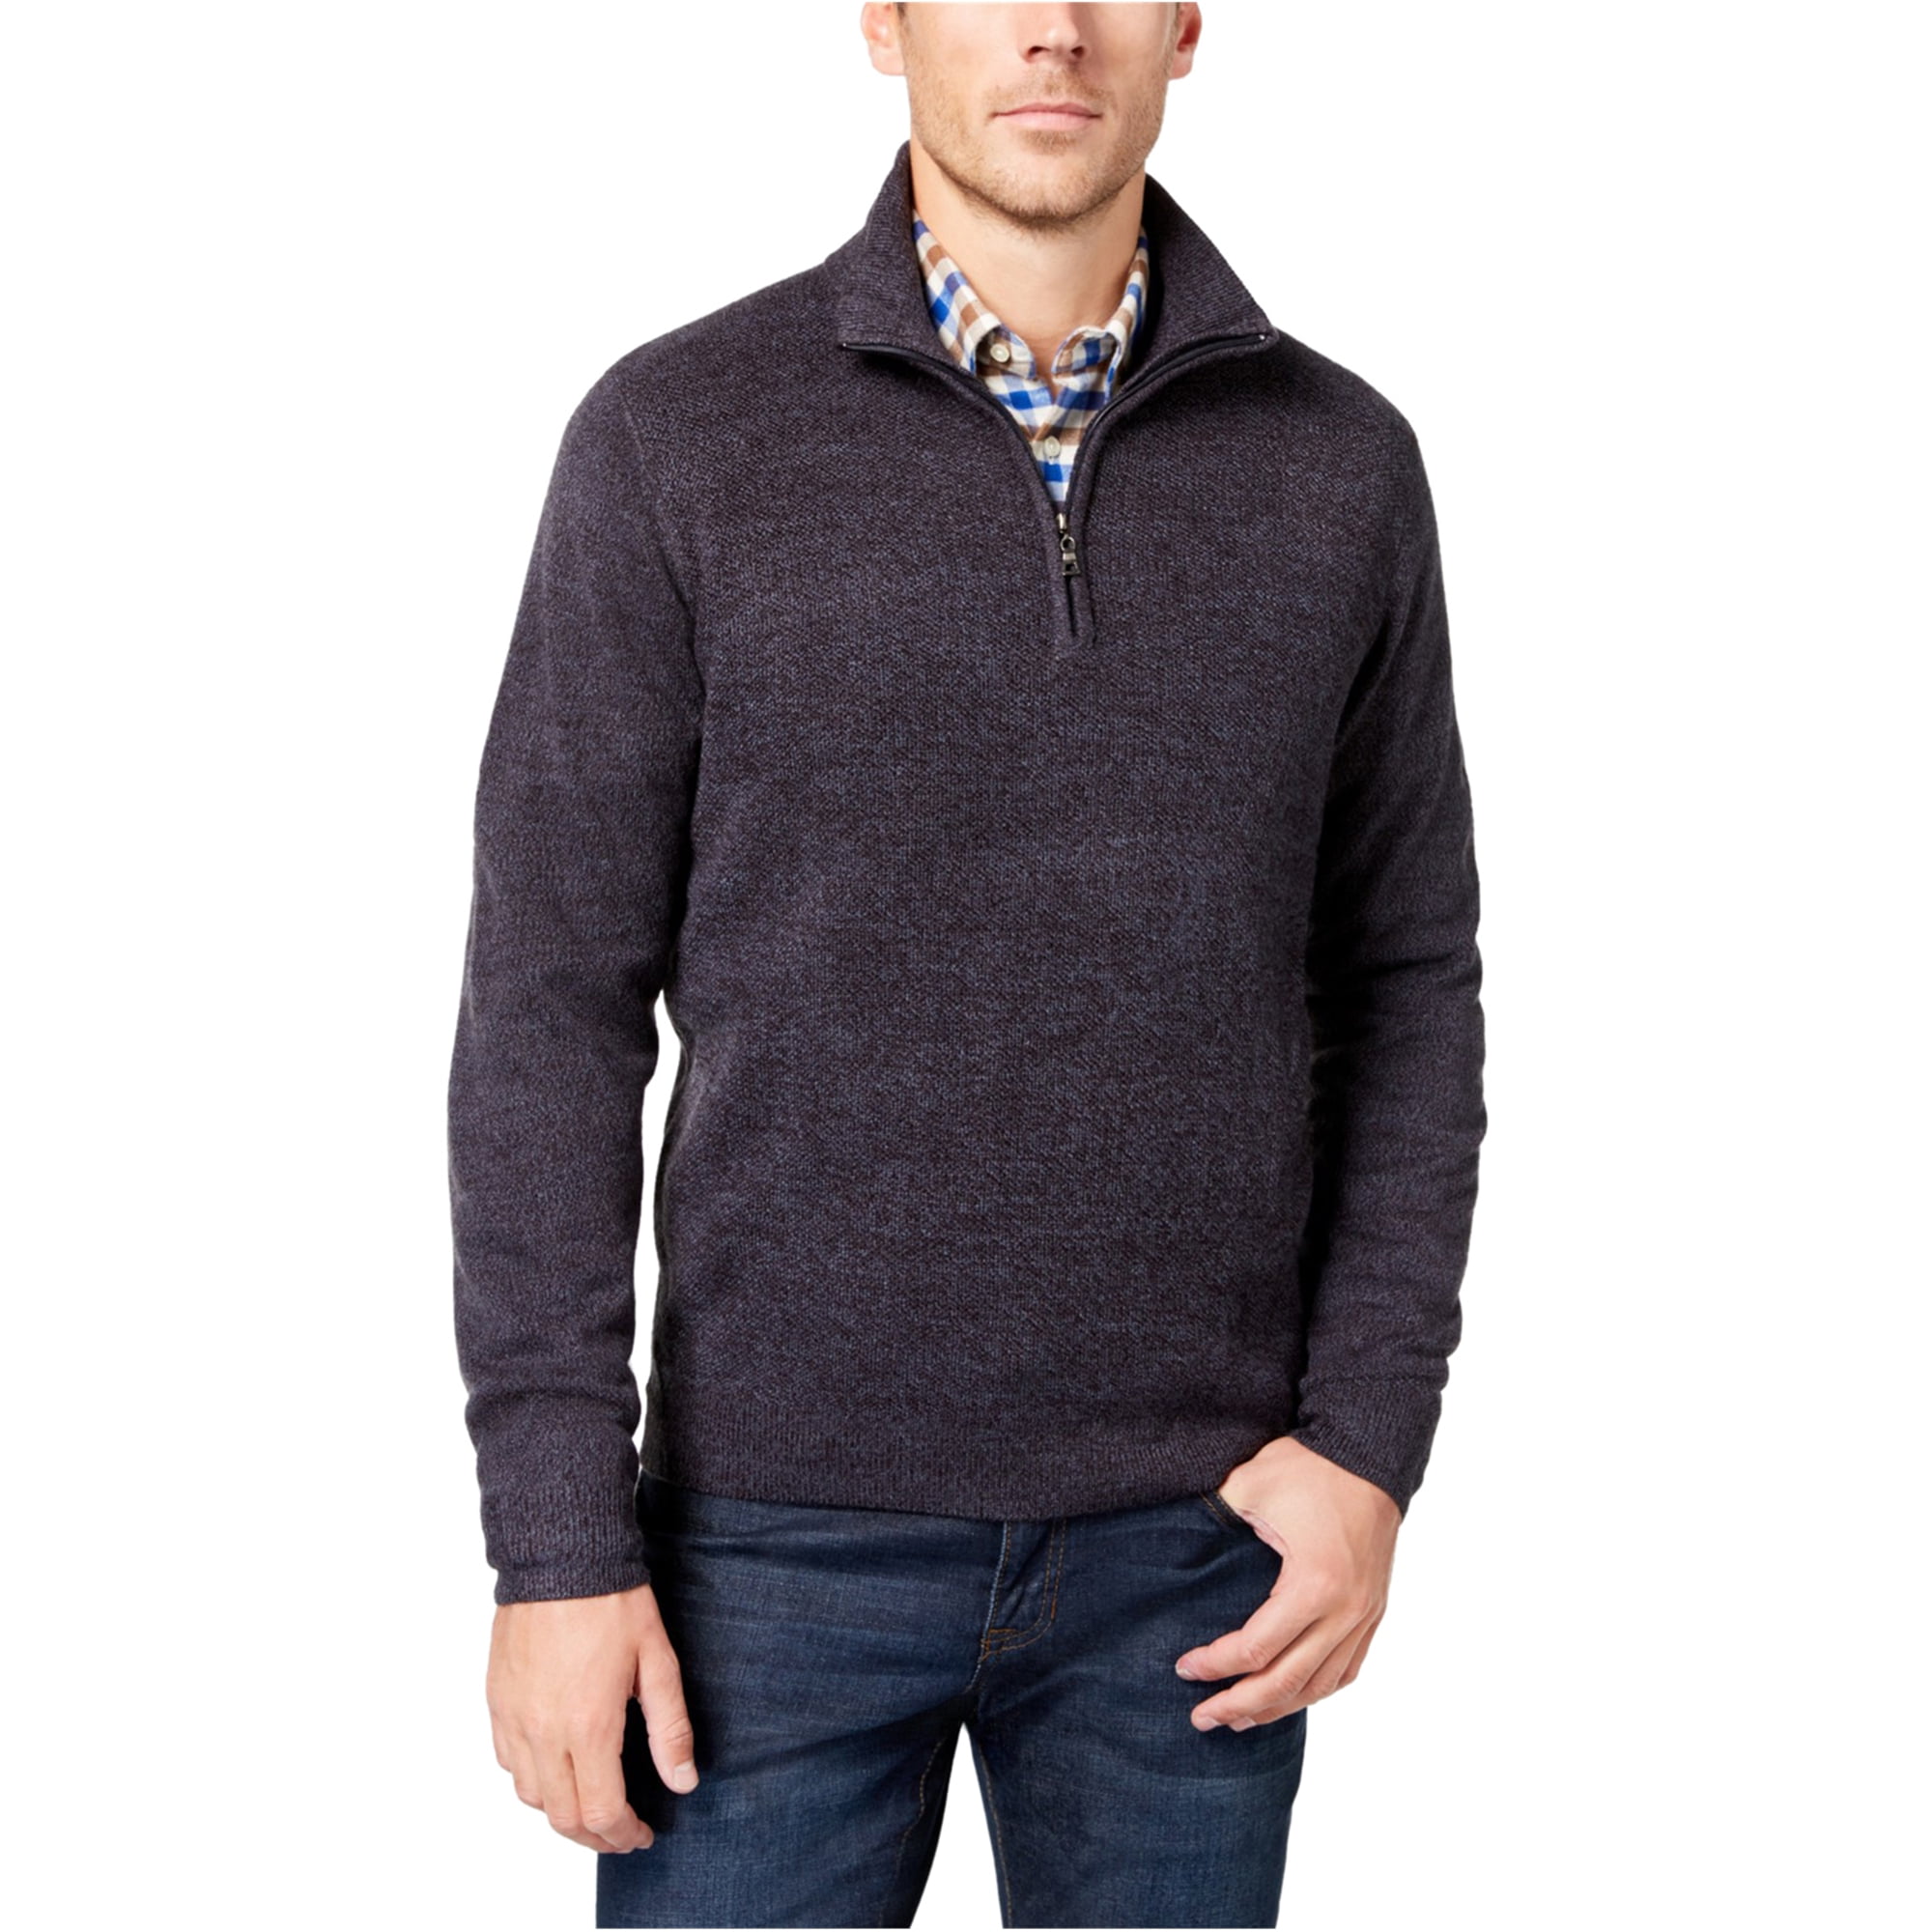 Weatherproof Mens Heathered Knit Sweater, Grey, Small - Walmart.com